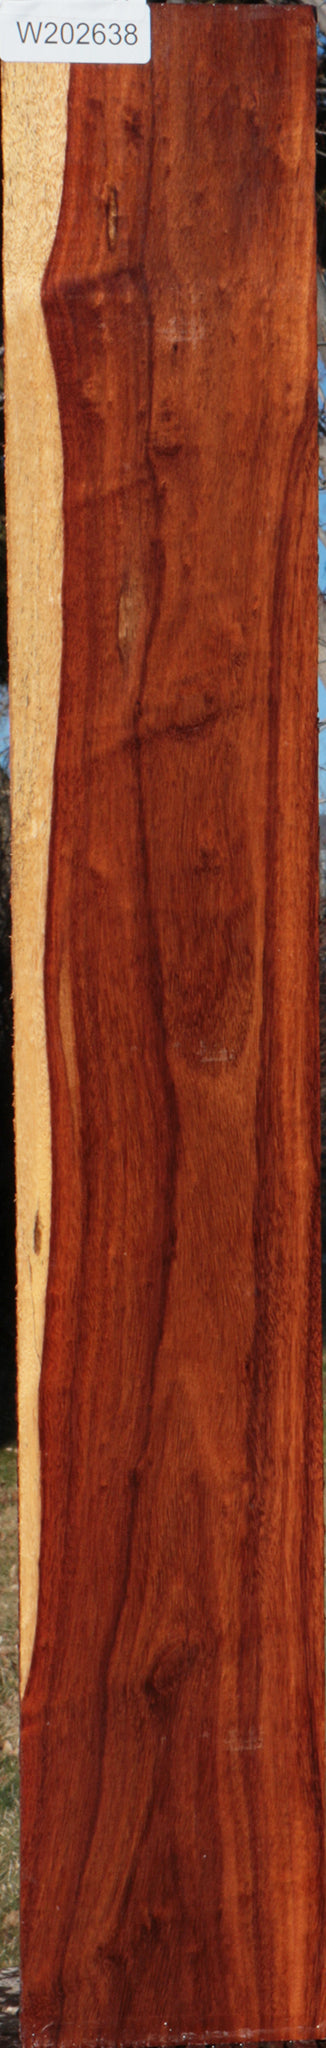 Granadillo Lumber